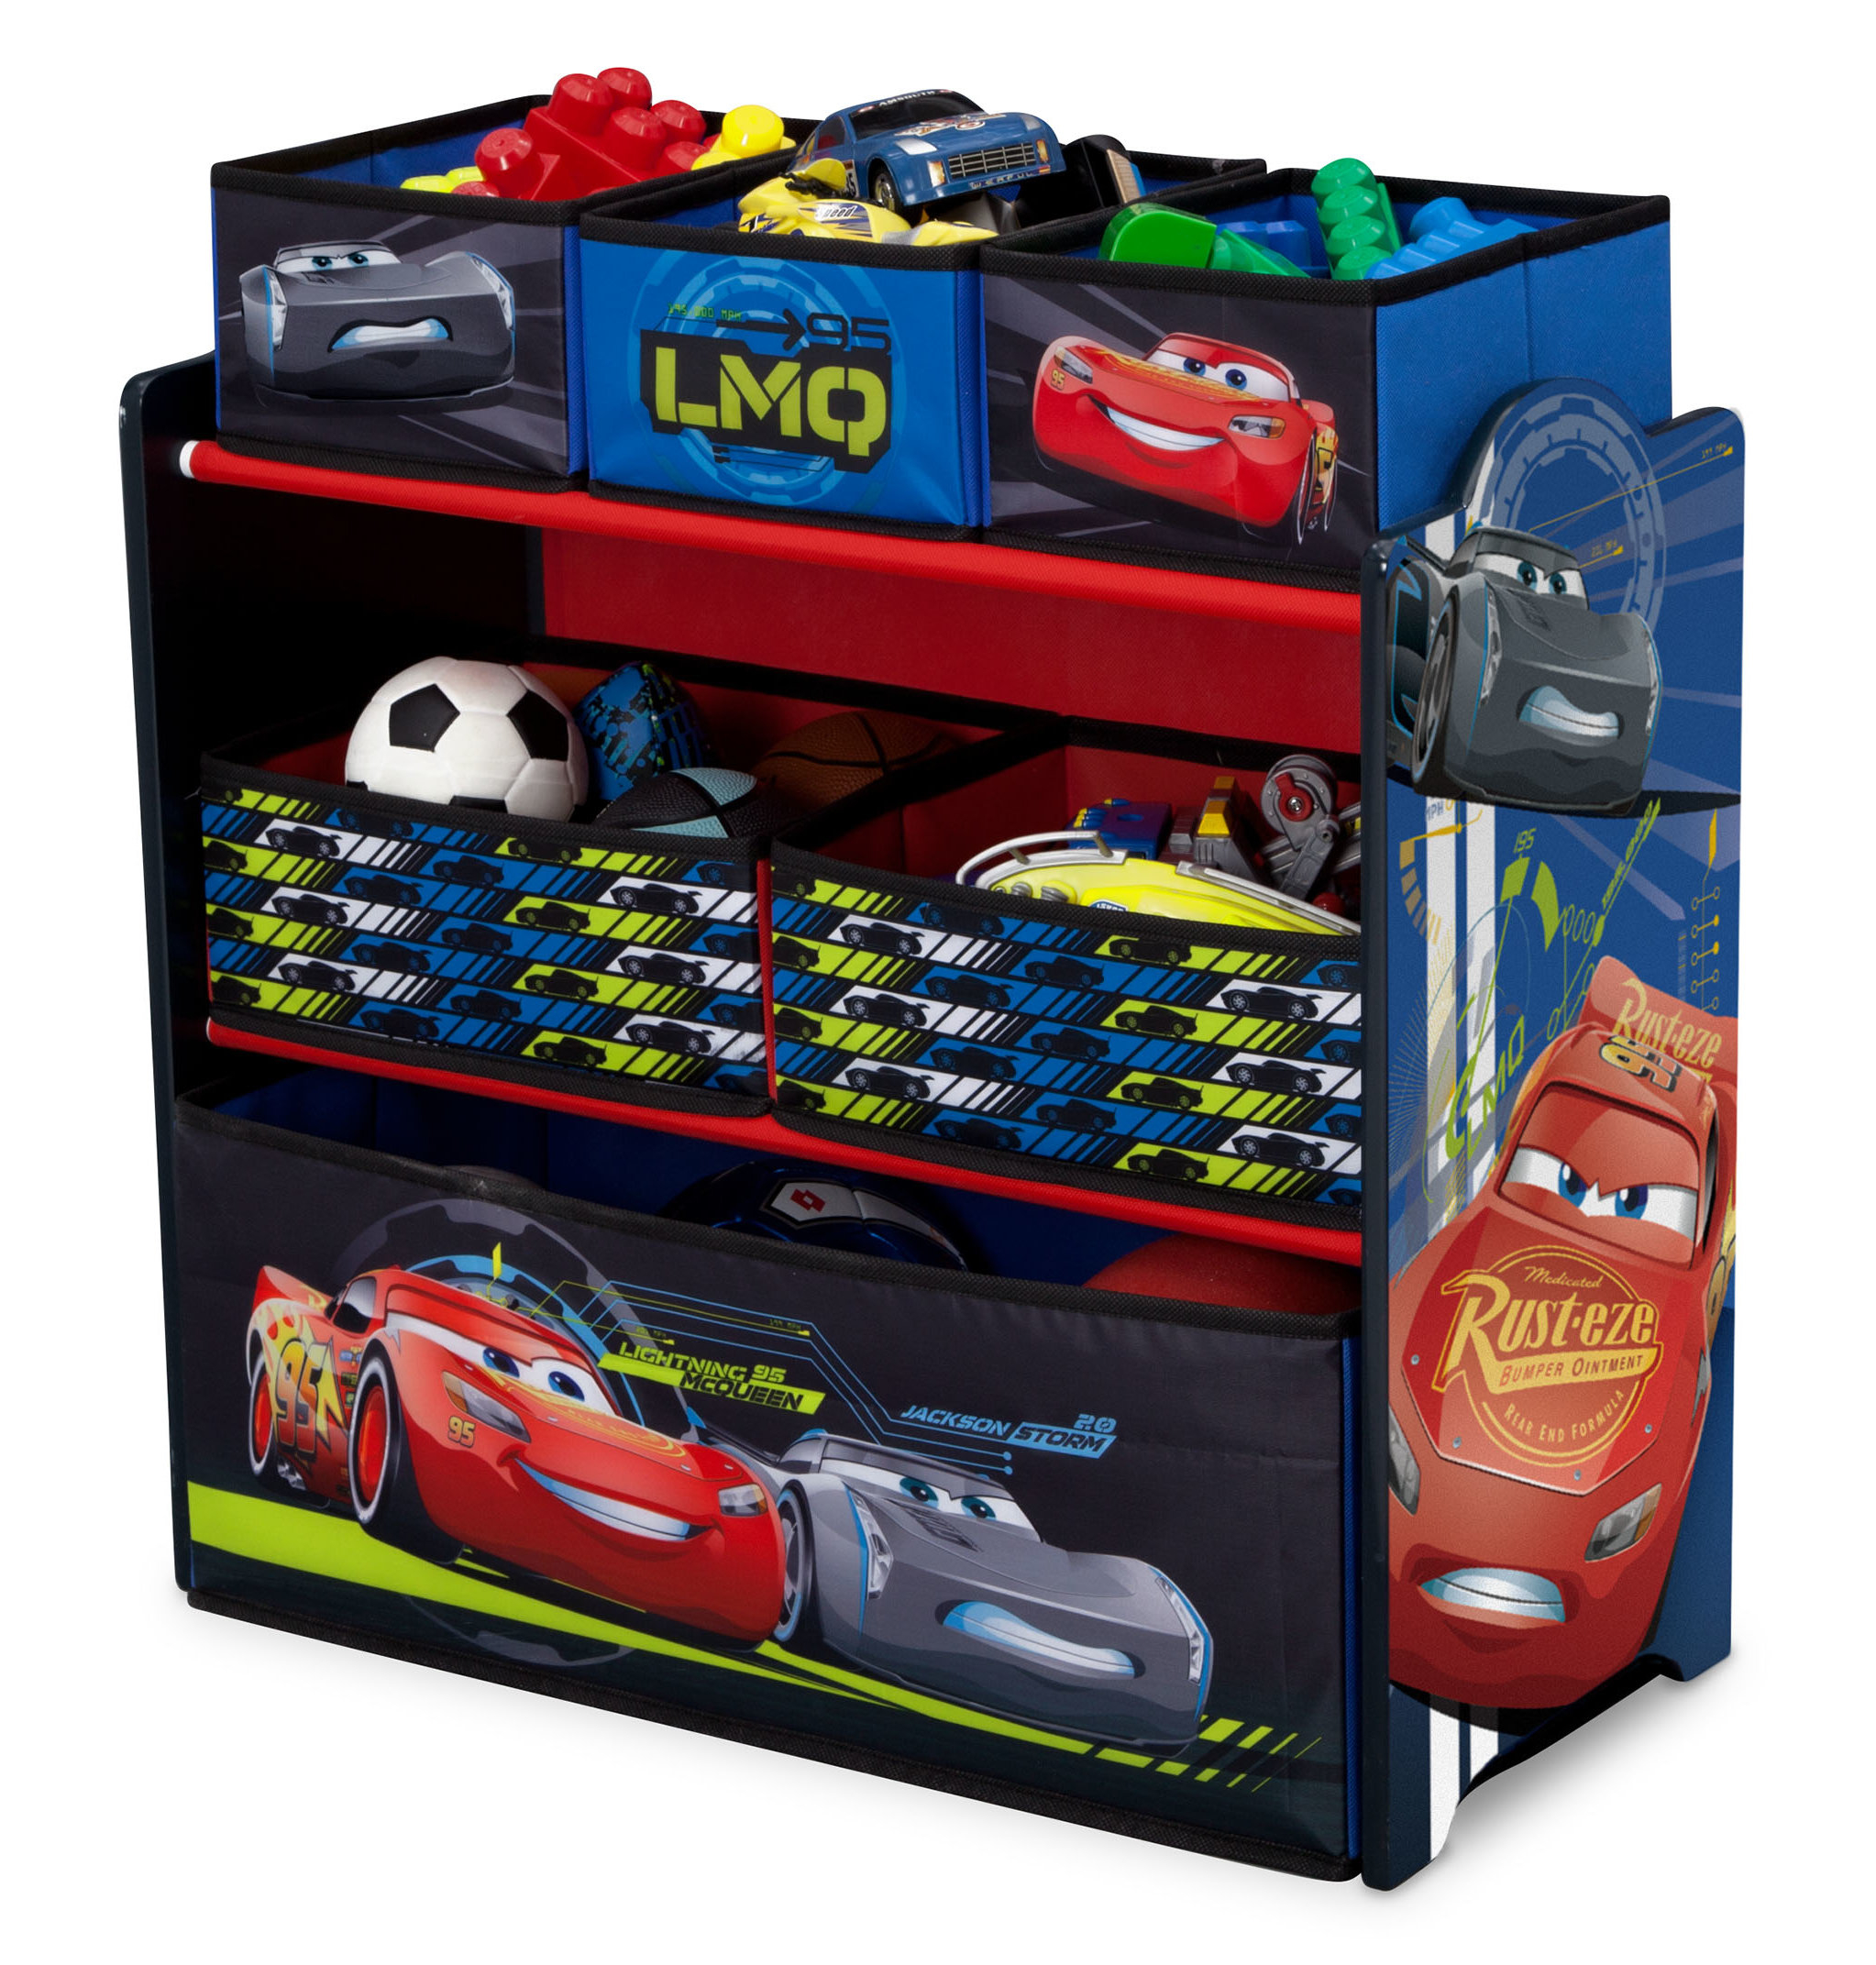 Delta Children Disneypixar Cars Multi Bin Toy Organizer Reviews throughout dimensions 2046 X 2143